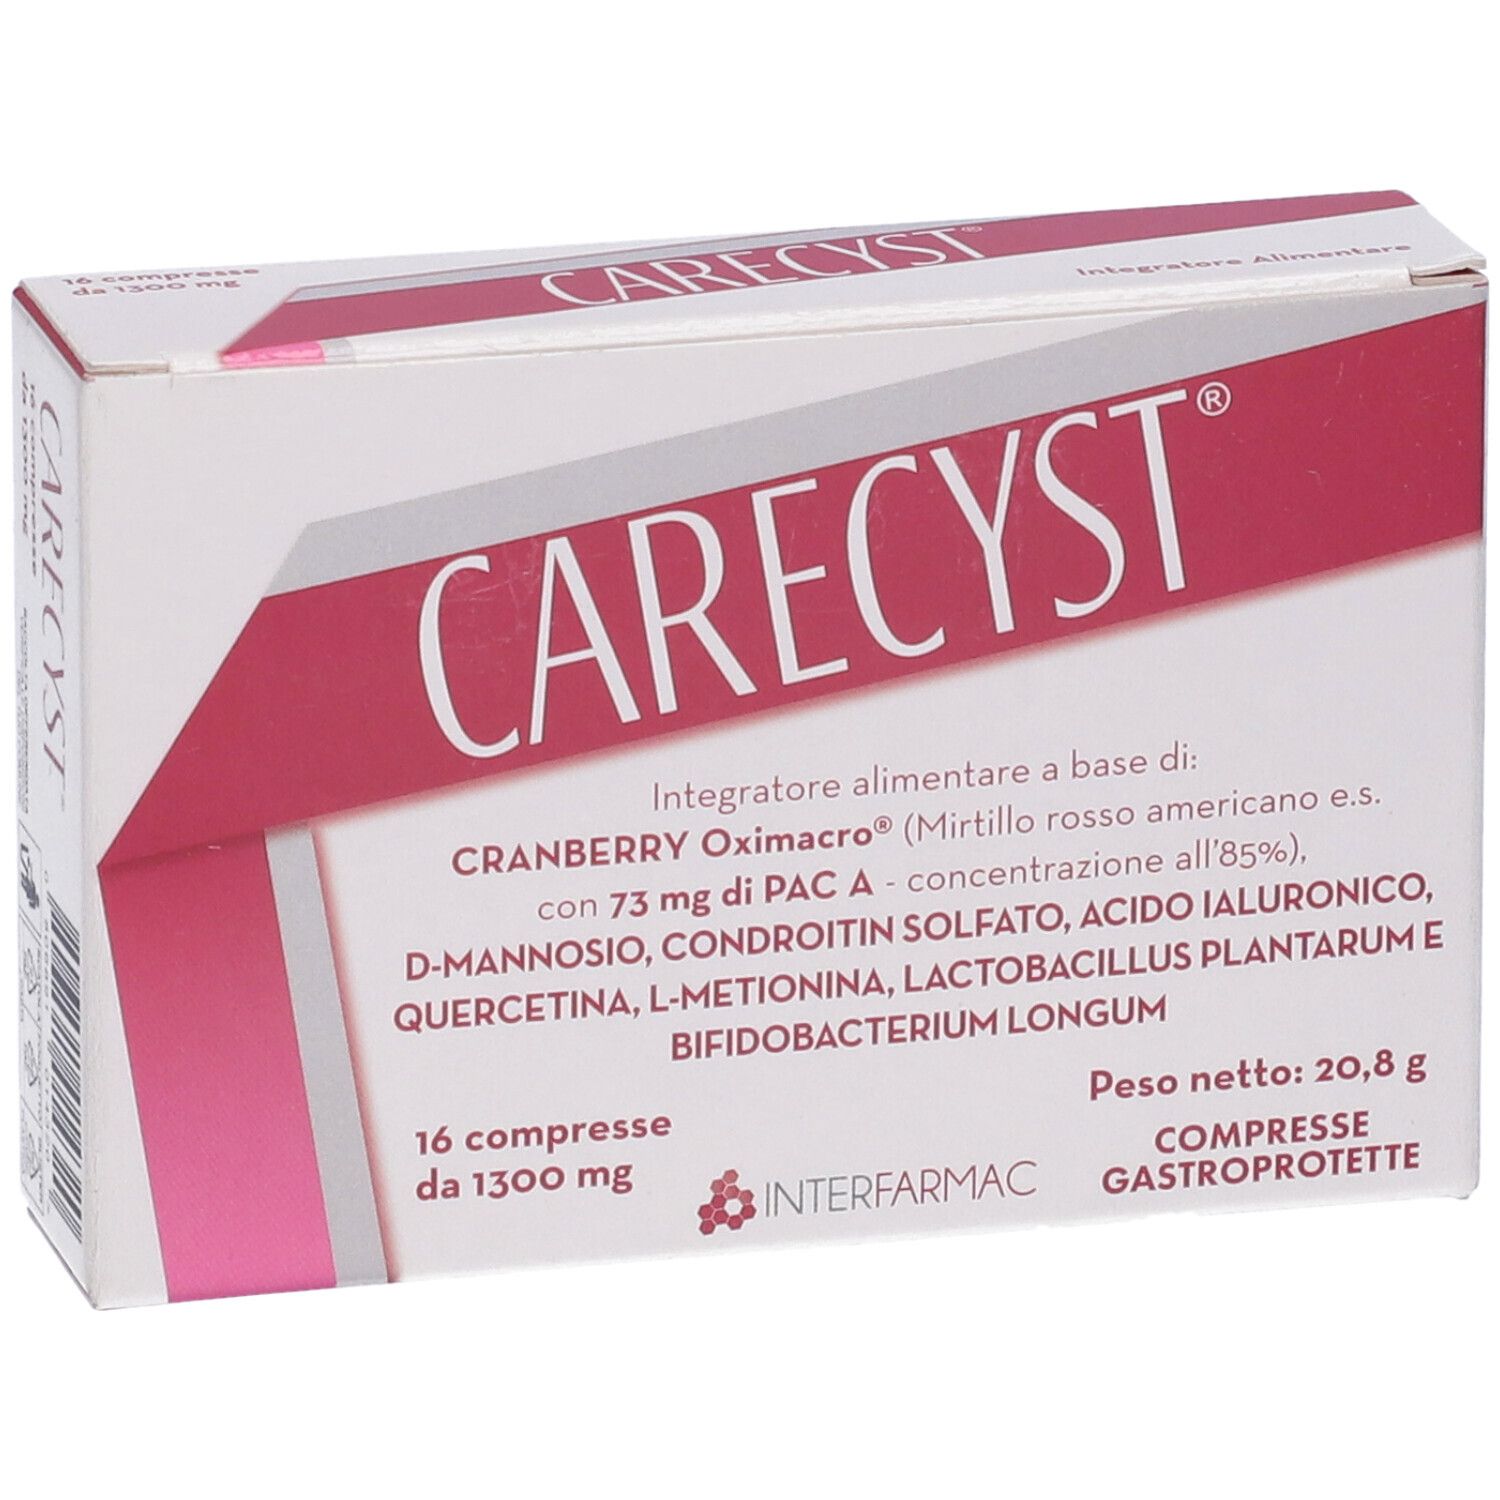 Carecyst 16 Compresse Gastroprotette